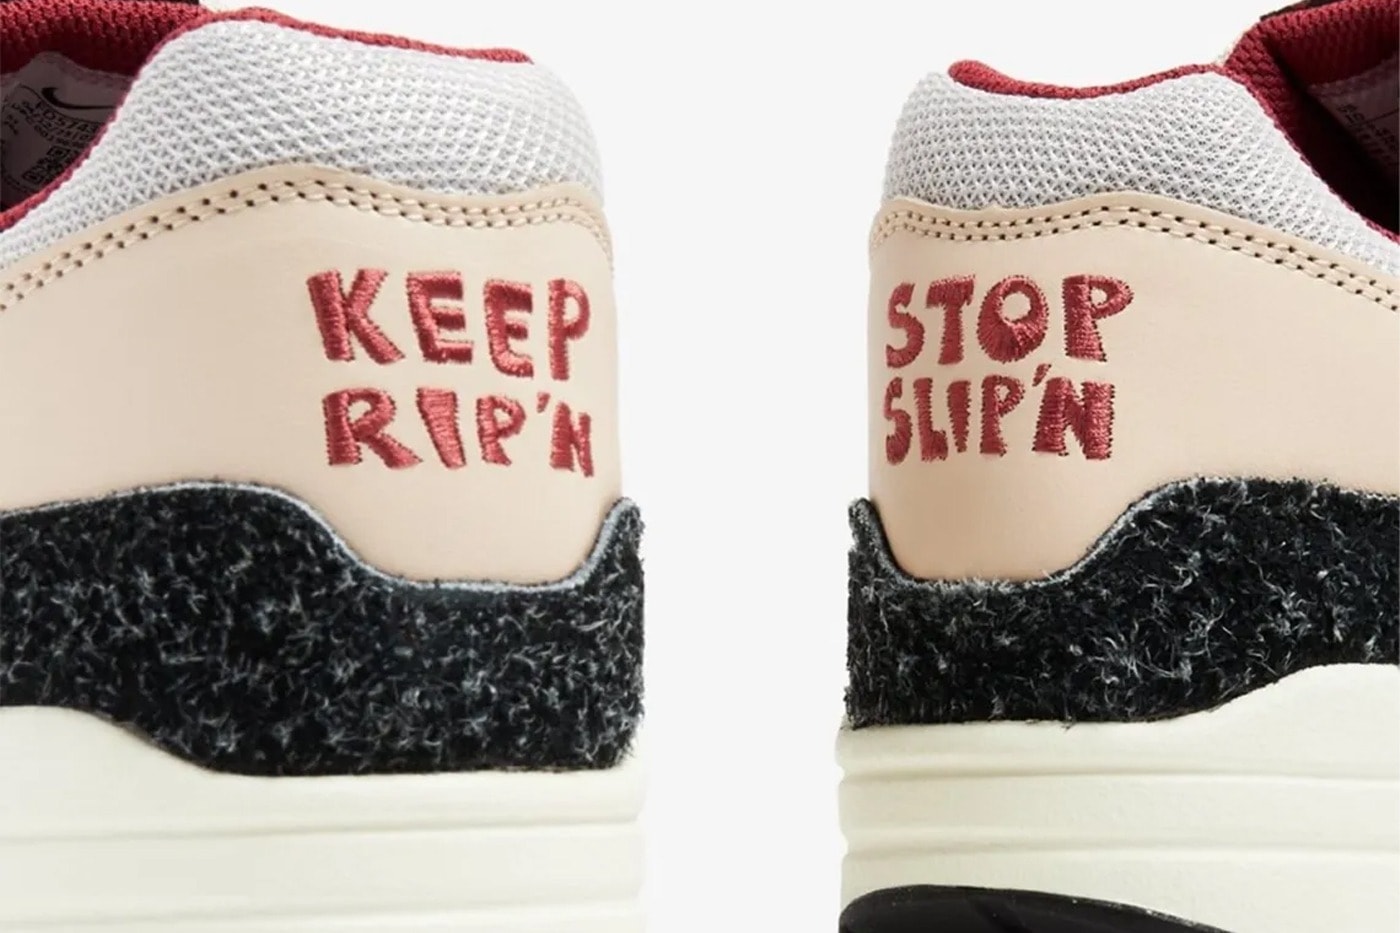 Nike Air Max 1 全新配色「Keep Rippin Stop Slippin」登場